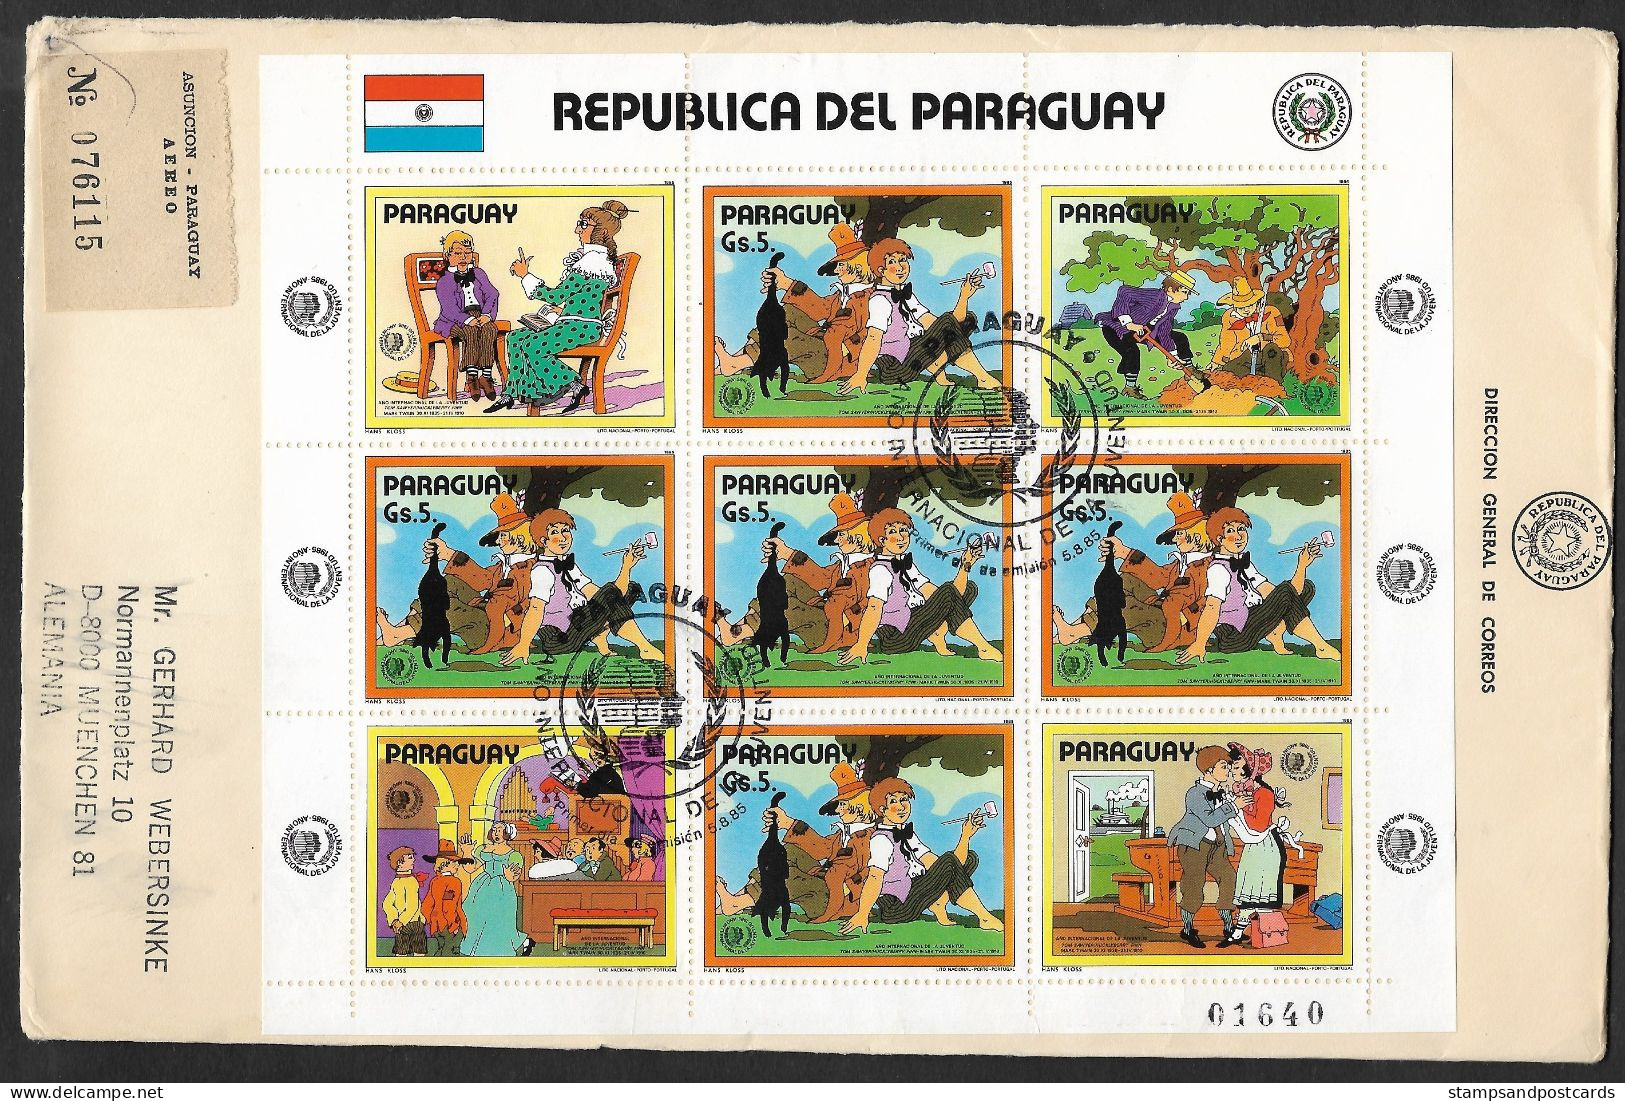 Paraguay 1985 FDC Recommandée Mark Twain Huckleberry Finn Tom Sawyer Année Internationale Jeunesse R FDC Int. Youth Year - Fairy Tales, Popular Stories & Legends